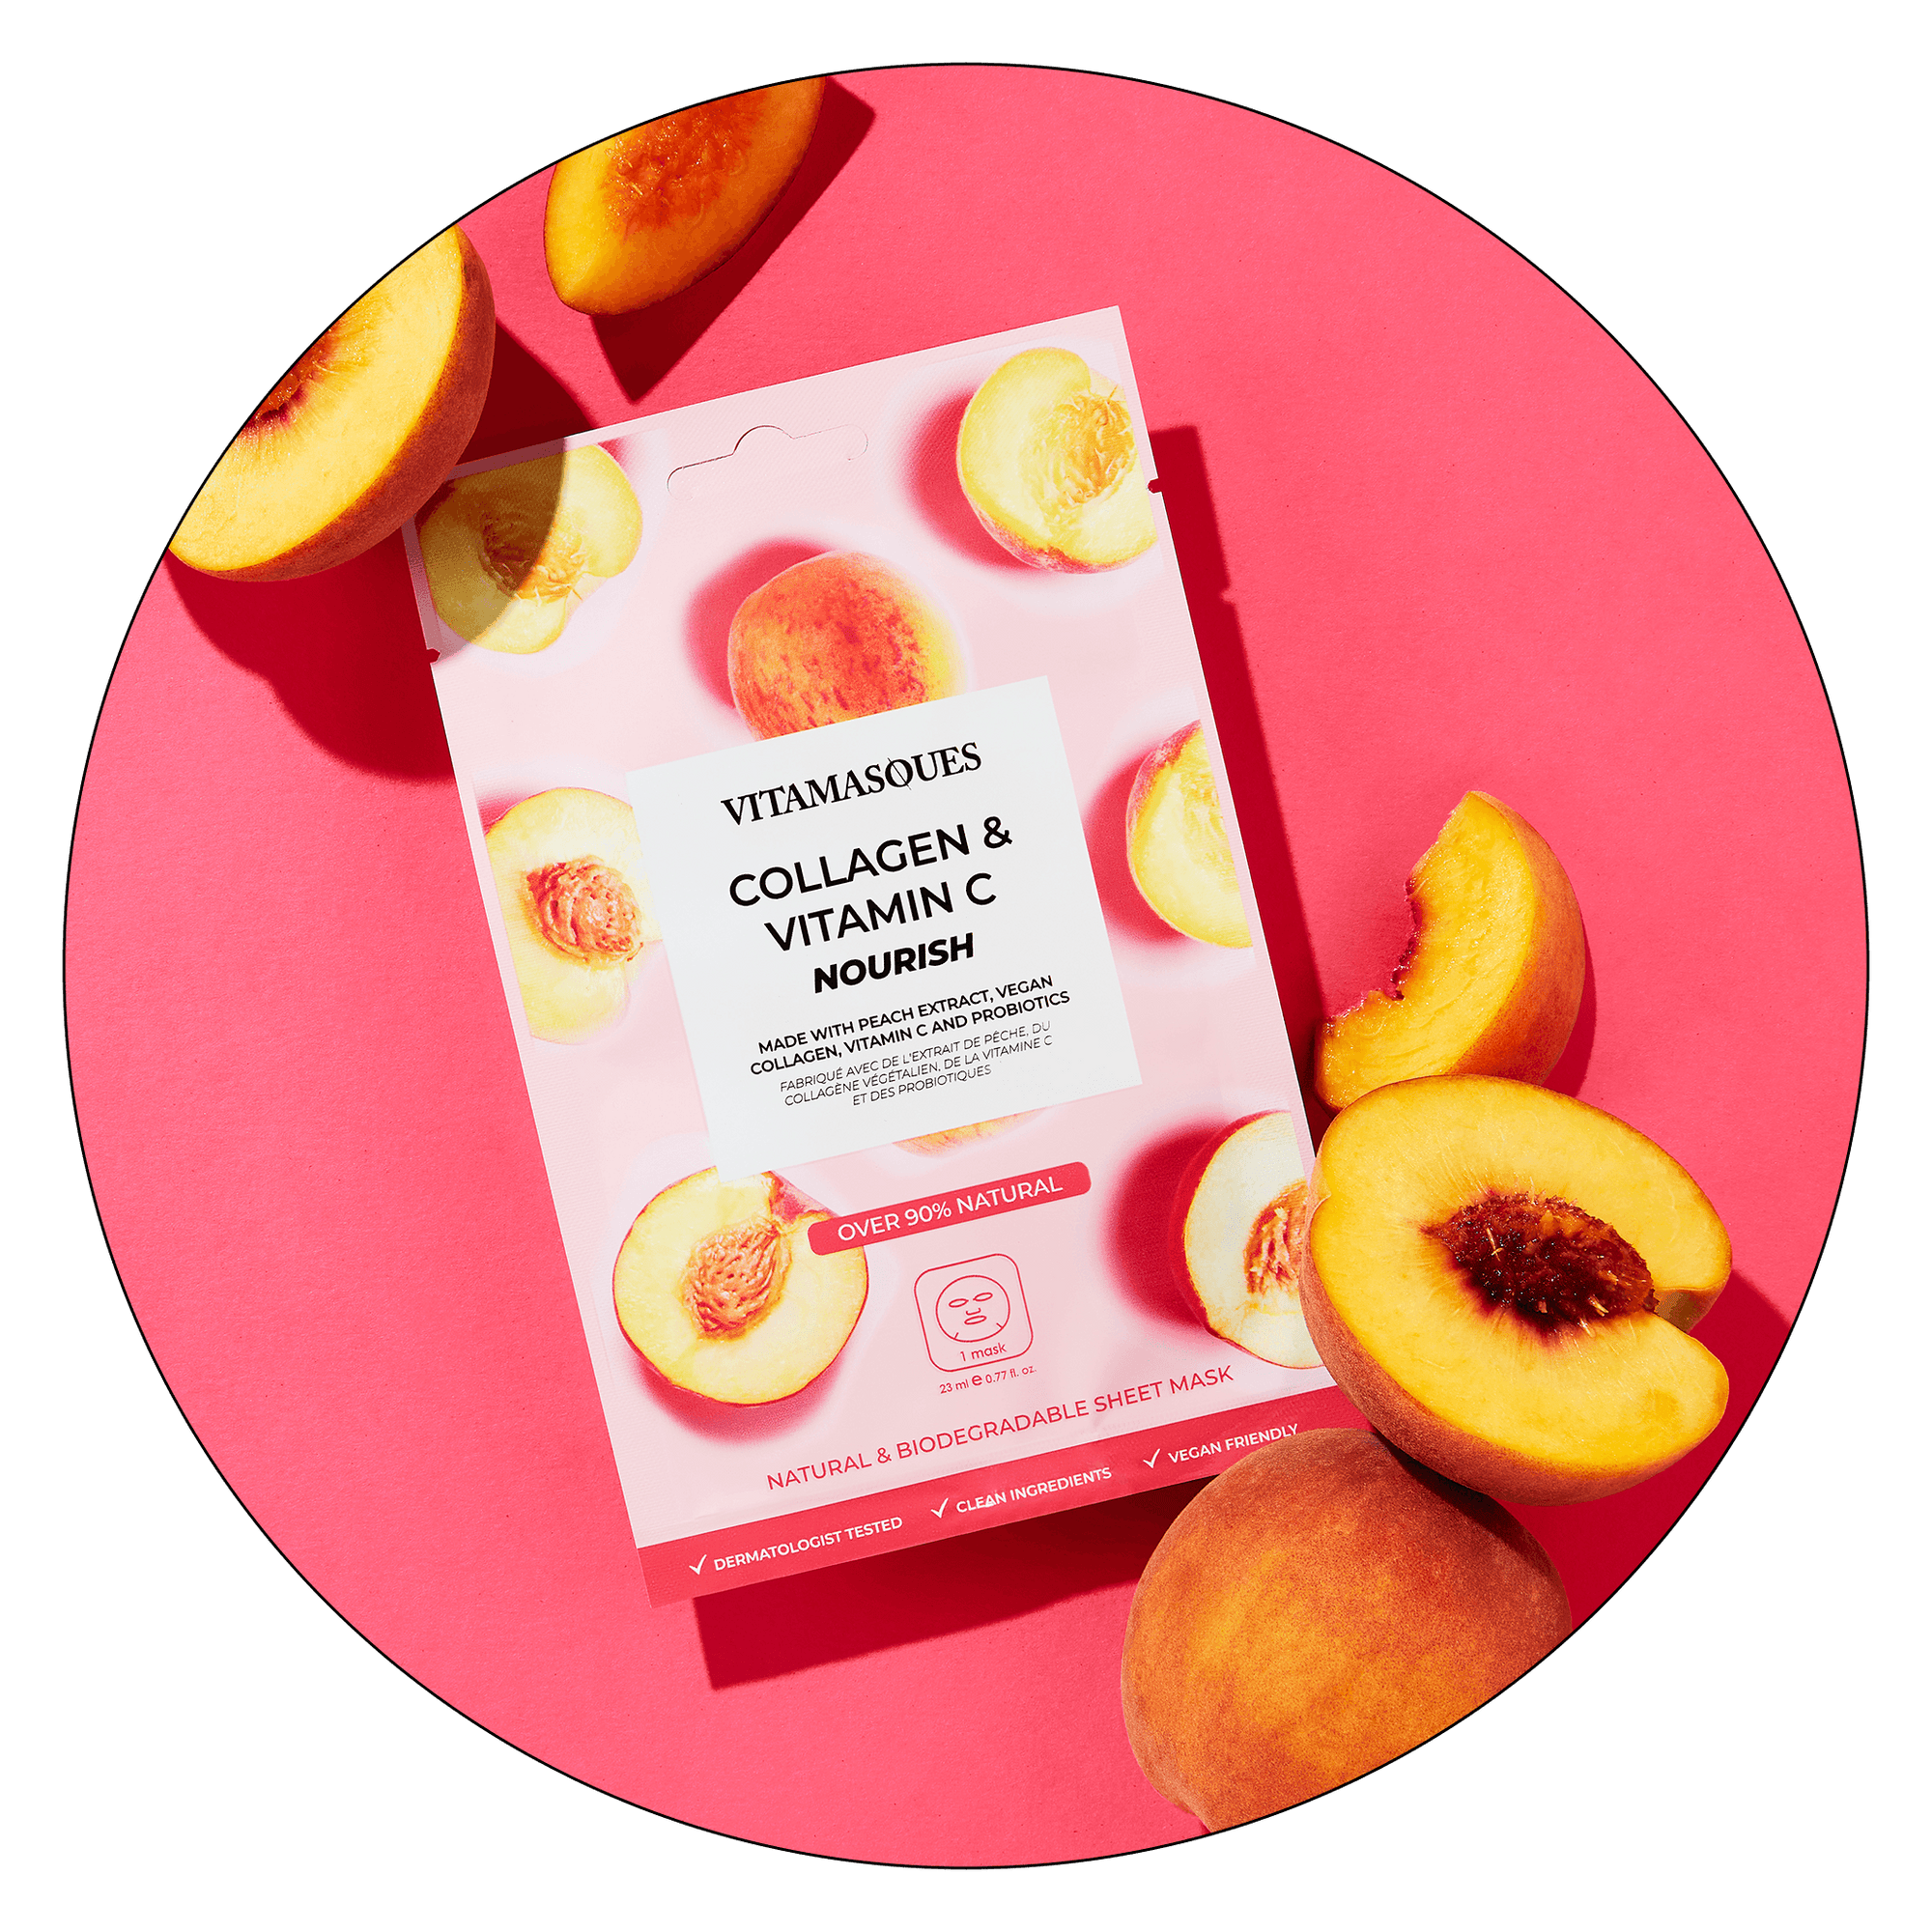 Collagen & Vitamin C Peach Sheet Mask - Vitamasques